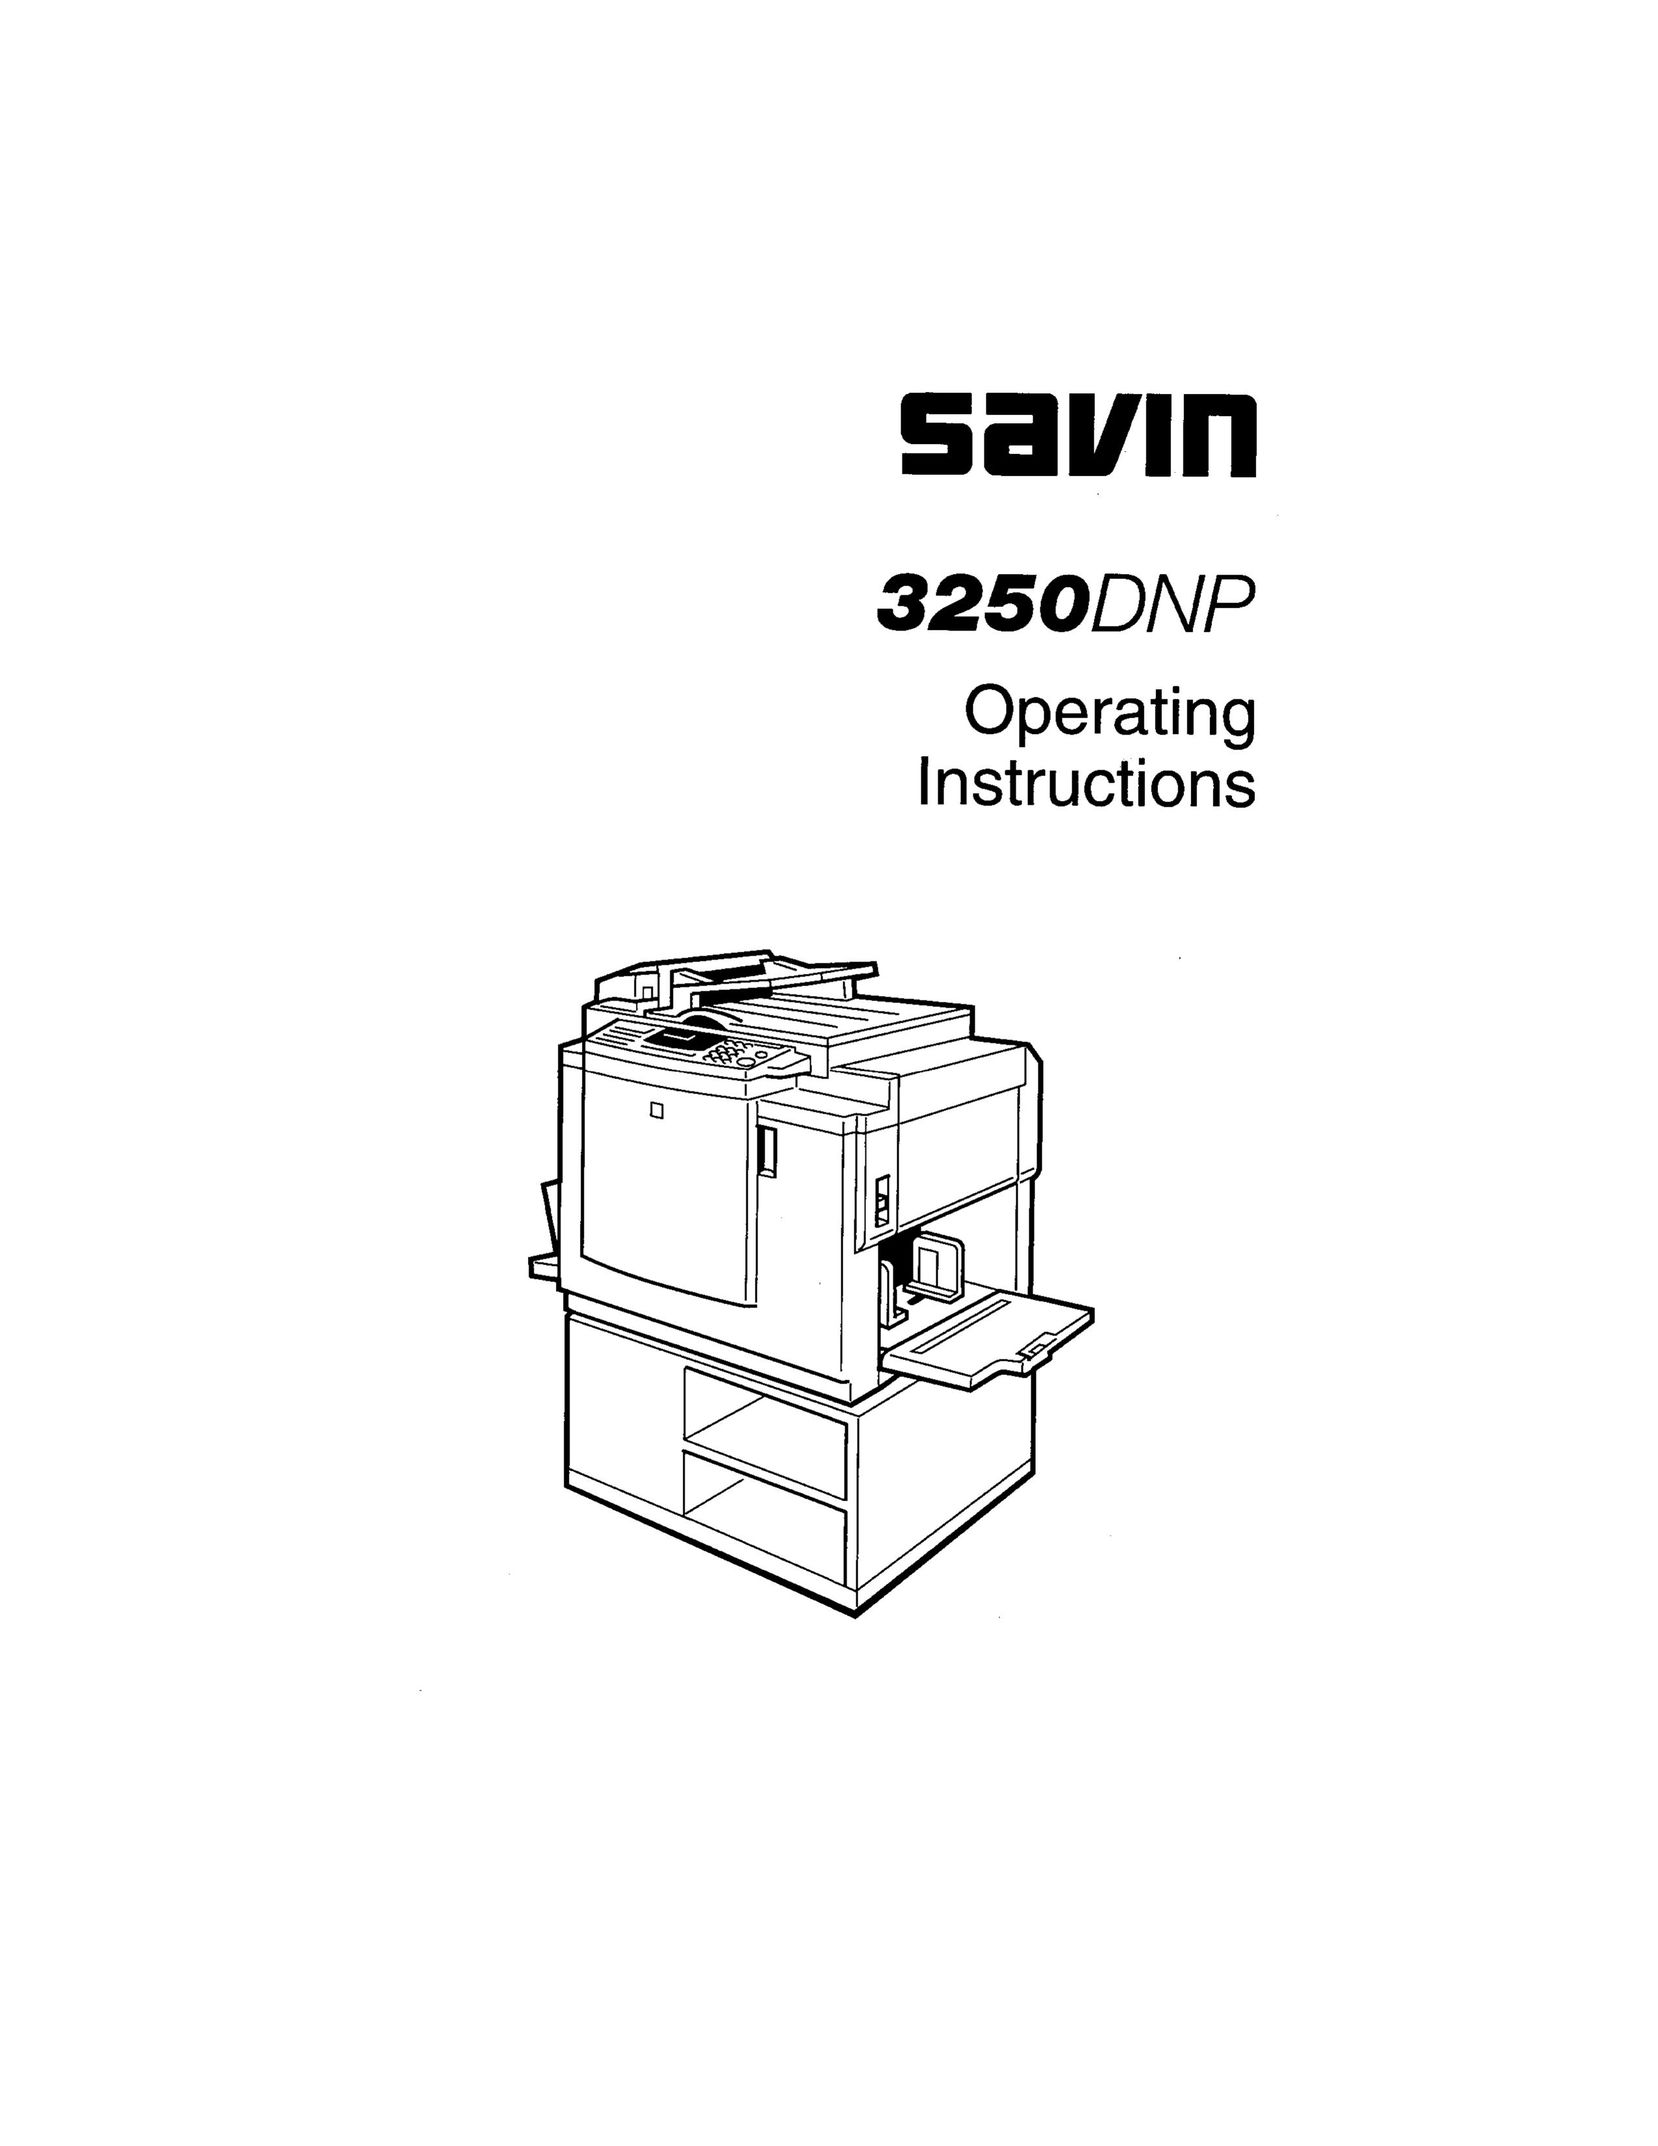 Savin 3250DNP All in One Printer User Manual